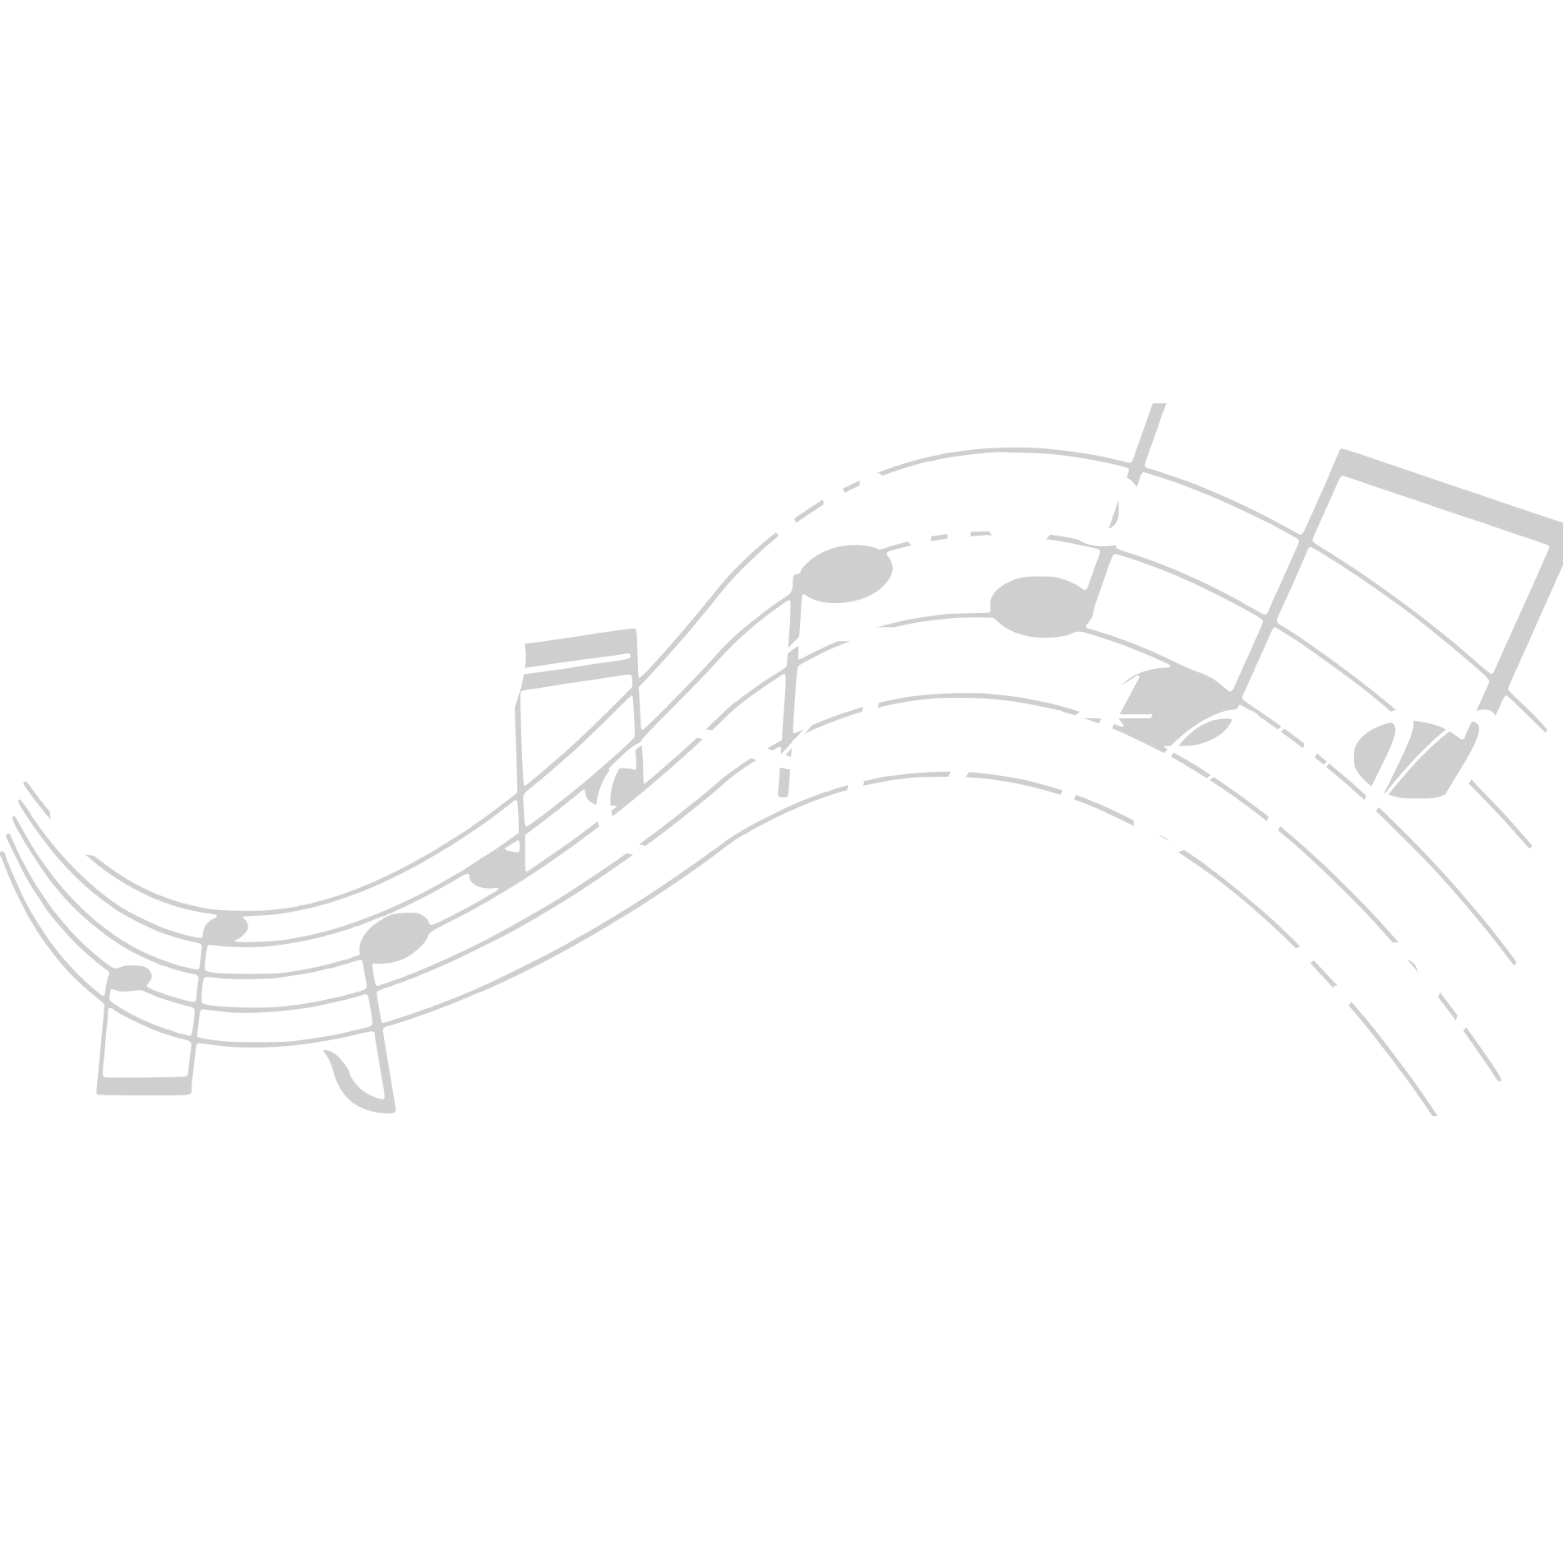 Coro Polifonico "Ad Artem"